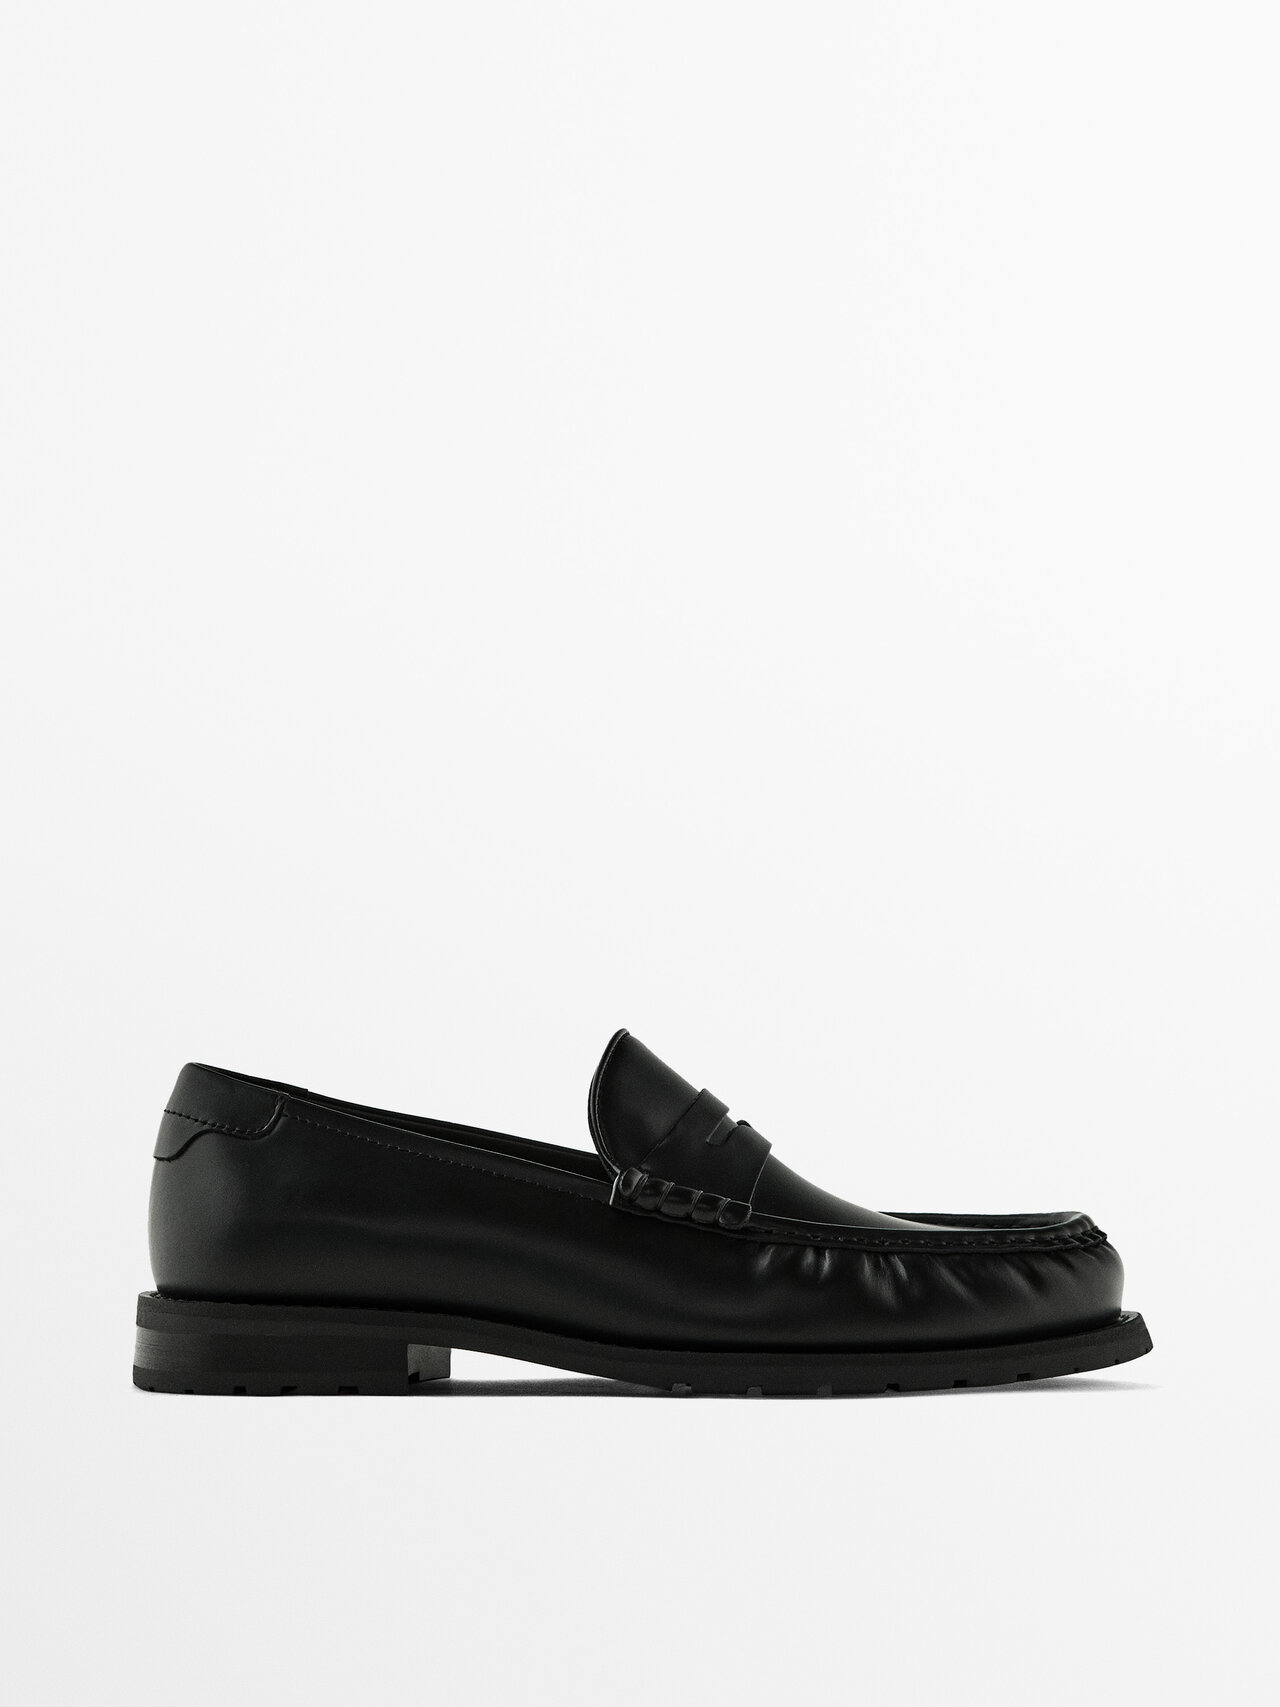 Massimo Dutti Black Leather Loafers